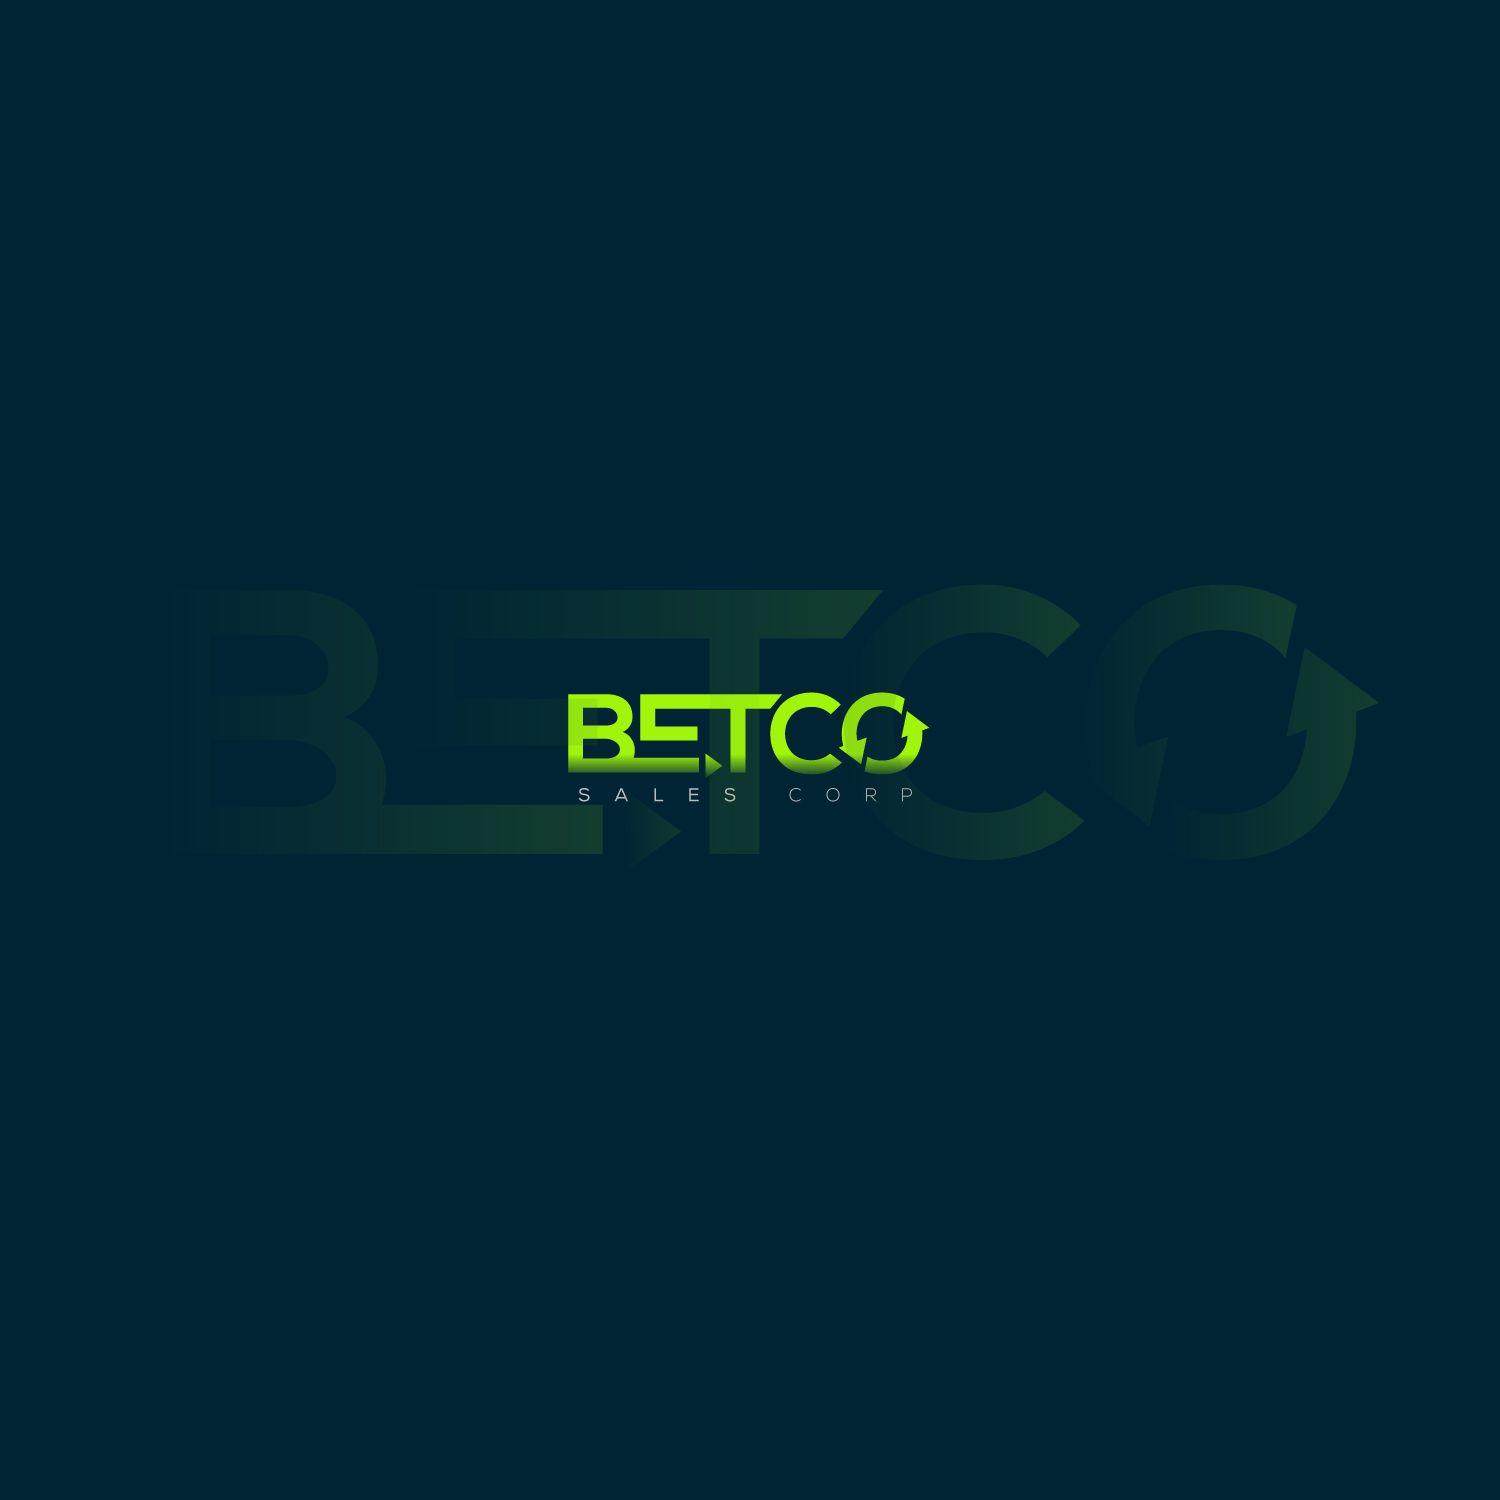 Betco Logo - Logo Design for Betco Sales Corp by kacimo | Design #21885816